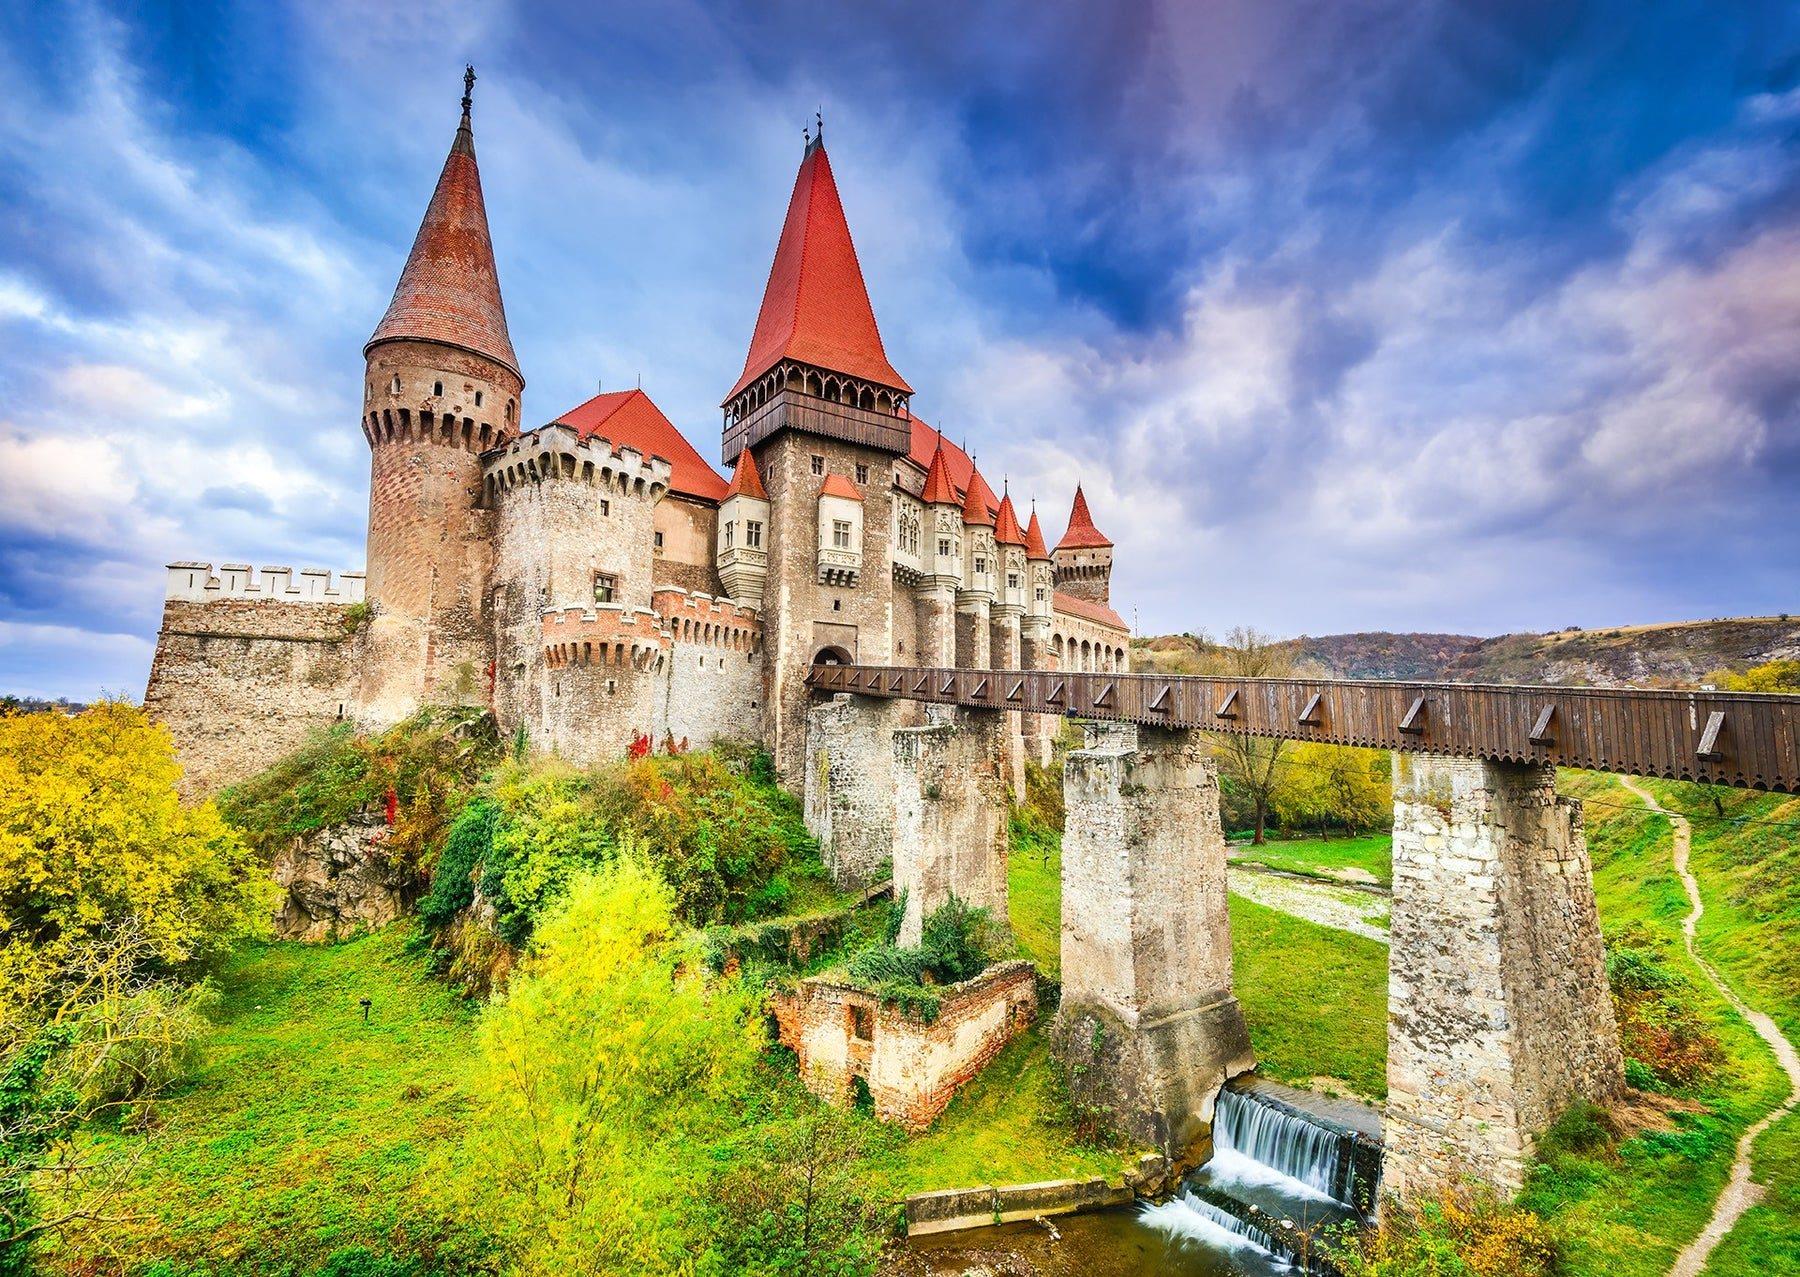 Enjoy The Corvin's Castle, Hunedoara Jigsaw Puzzle (1000 Pieces)